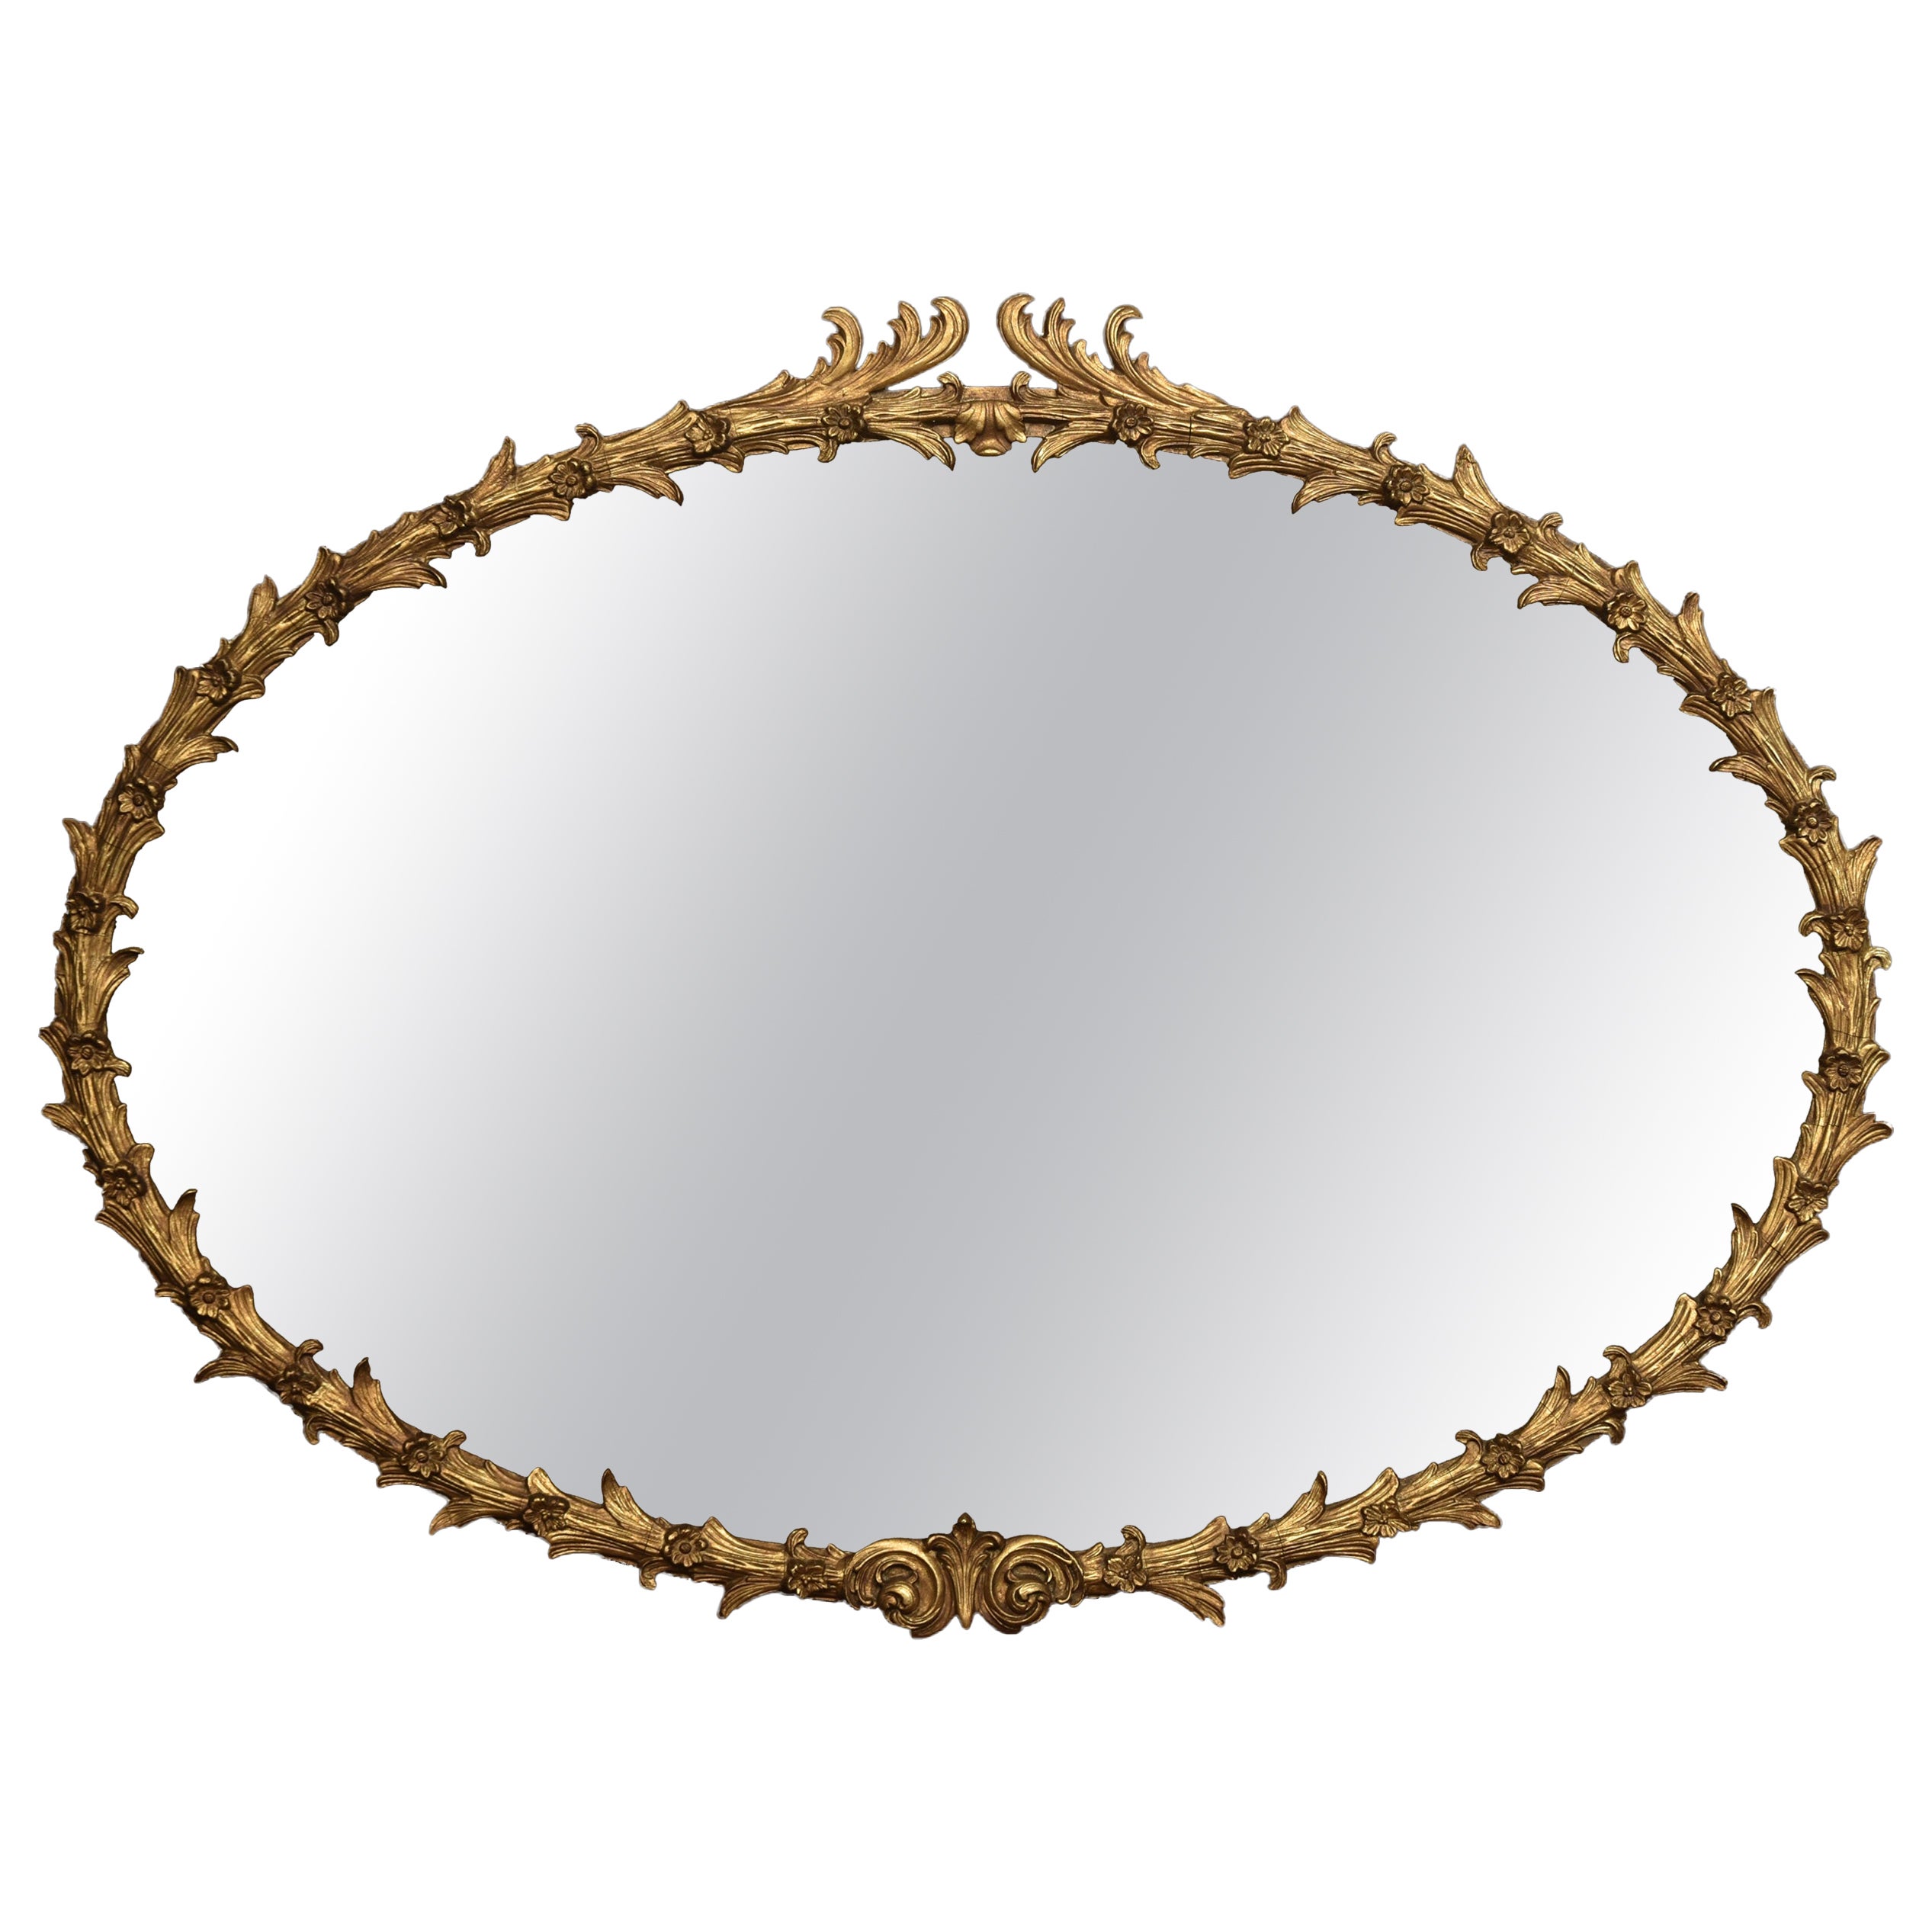 George III Style Oval Giltwood Wall Mirror